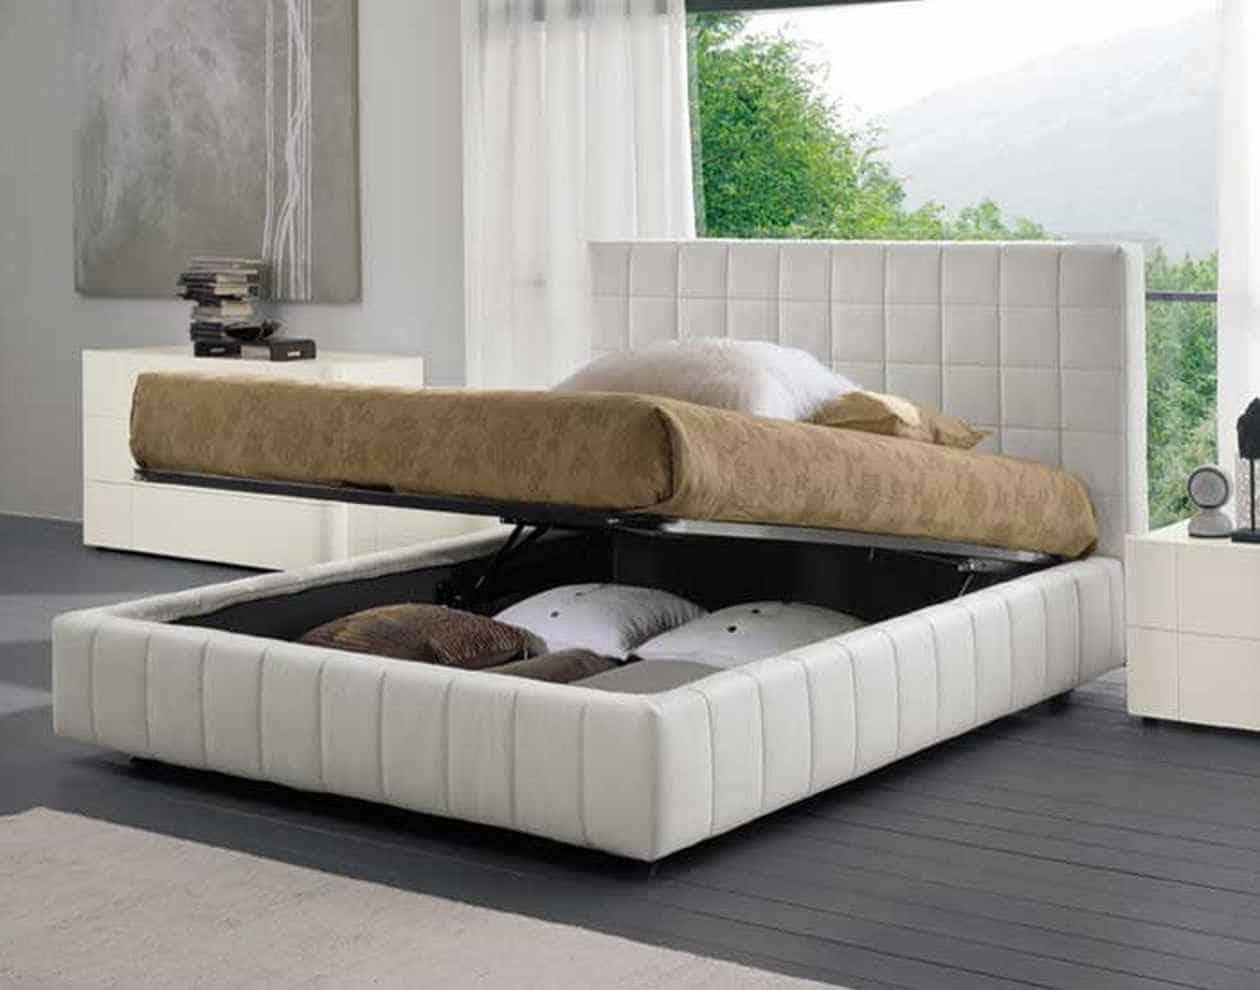 A smart storage bed